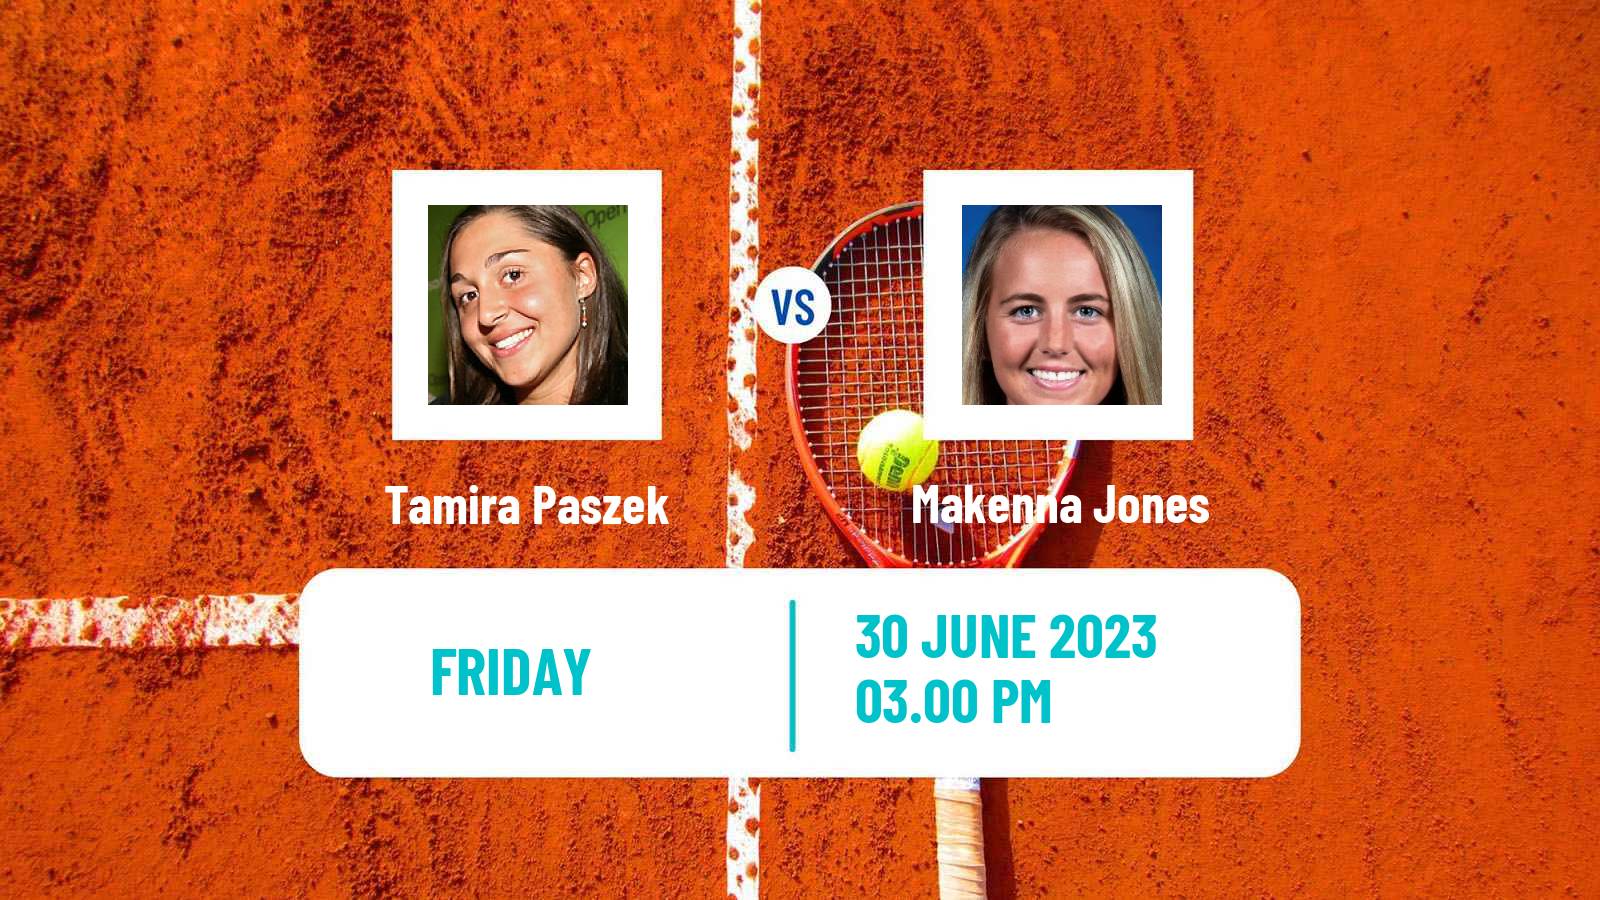 Tennis ITF W40 Palma Del Rio Women Tamira Paszek - Makenna Jones